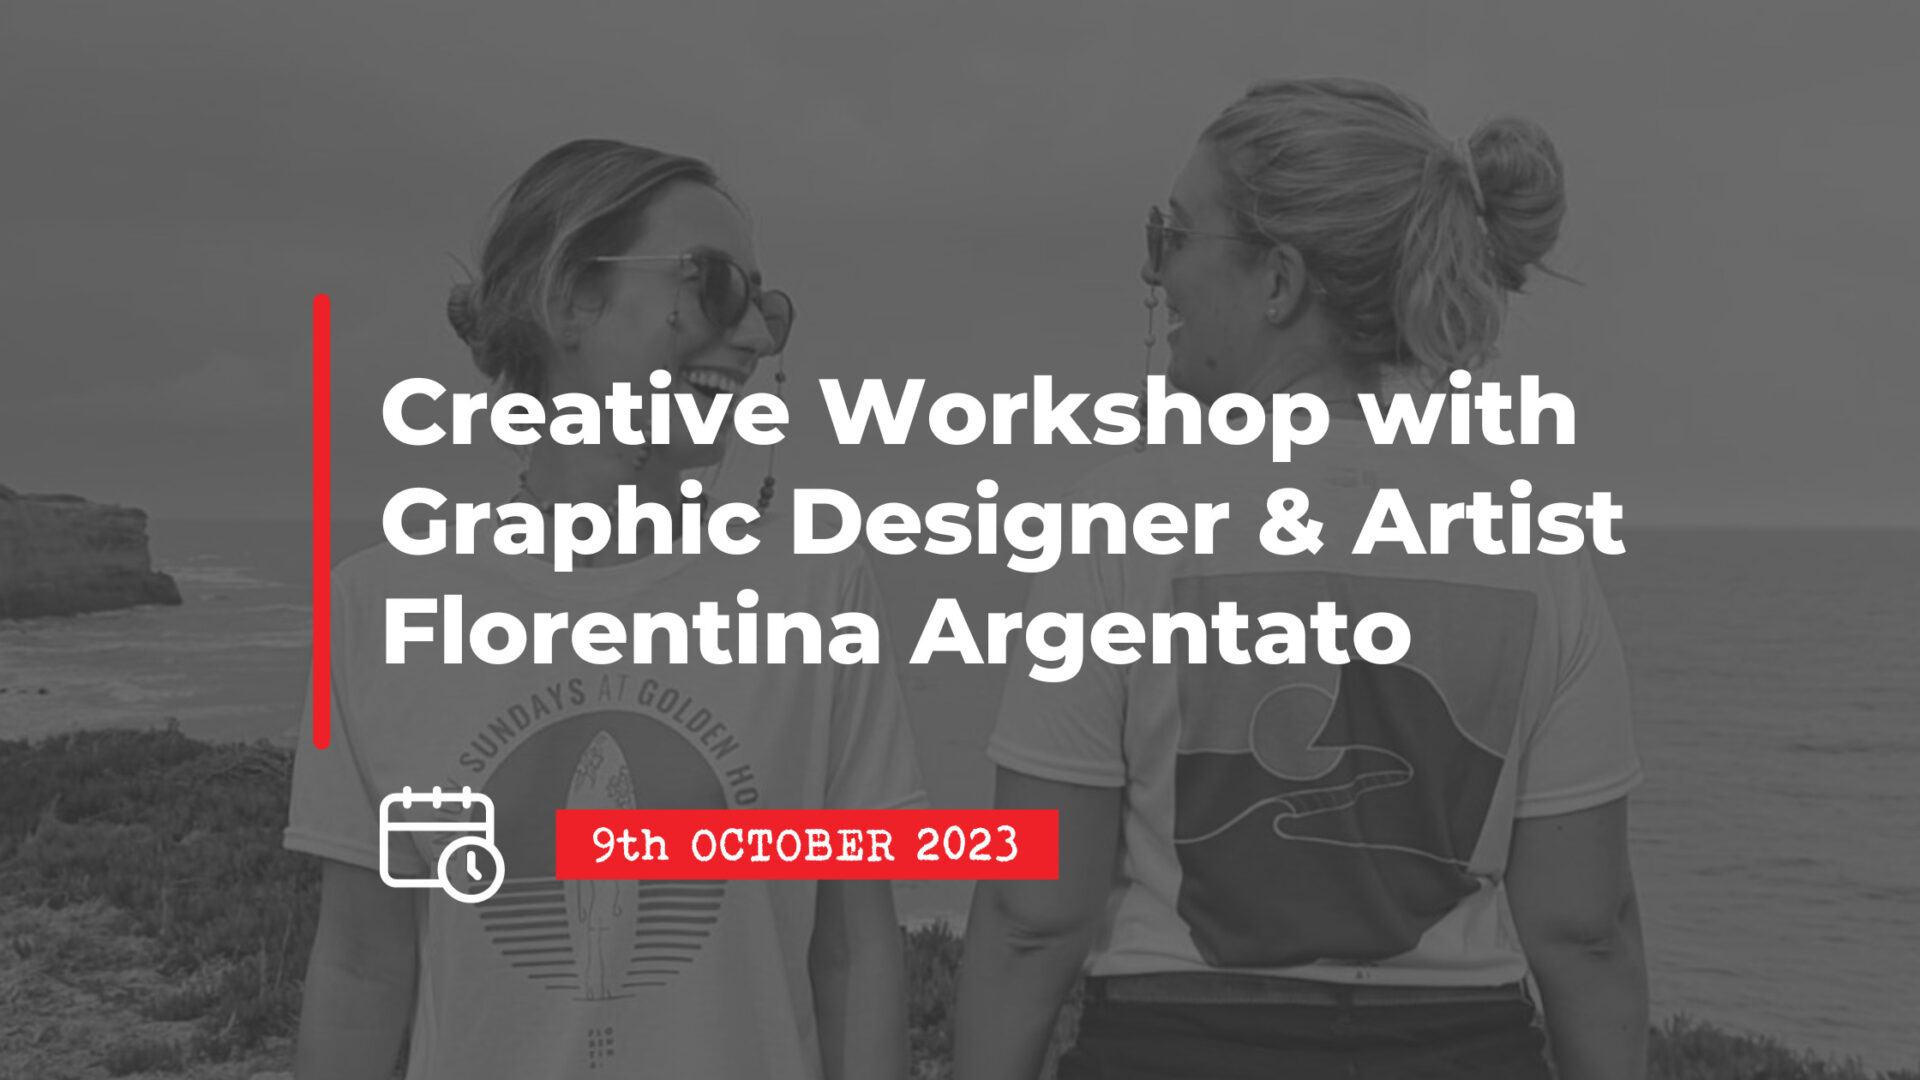 9 October: Creative Workshop with Graphic Designer & Artist Florentina Argentato